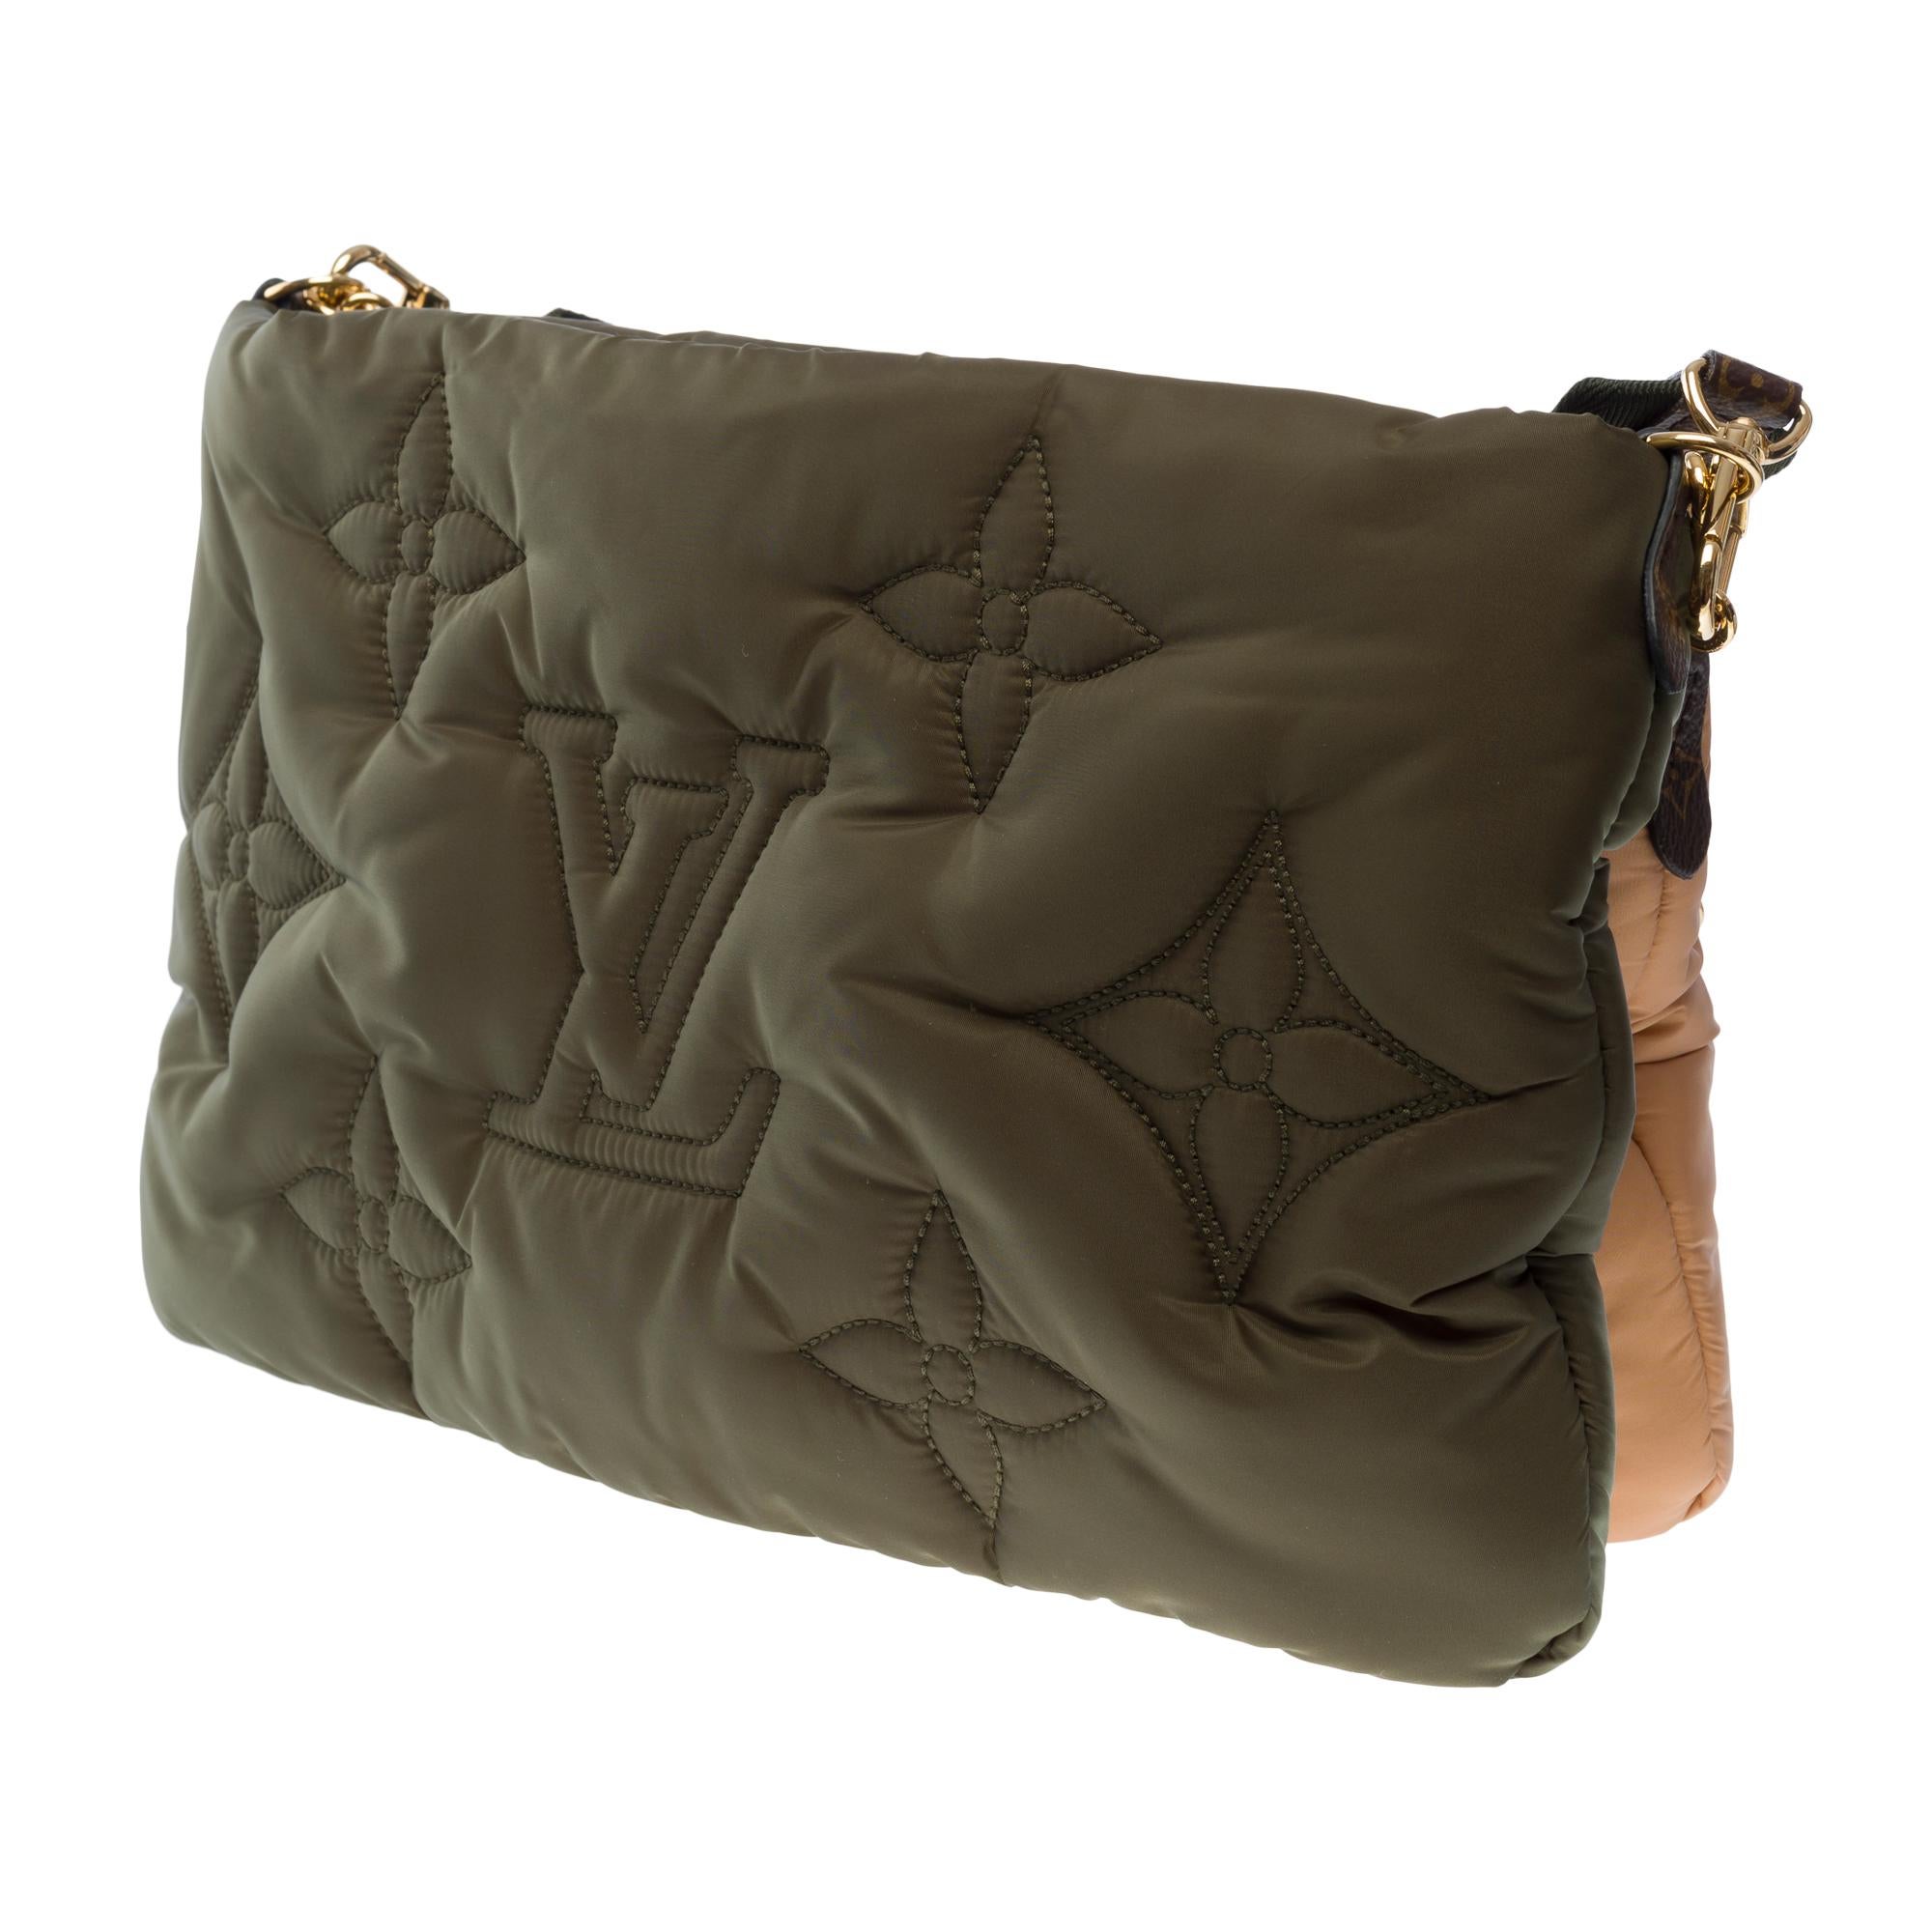 New Louis Vuitton Pillow Maxi Pochette shoulder bag in khaki/Beige nylon, GHW For Sale 2